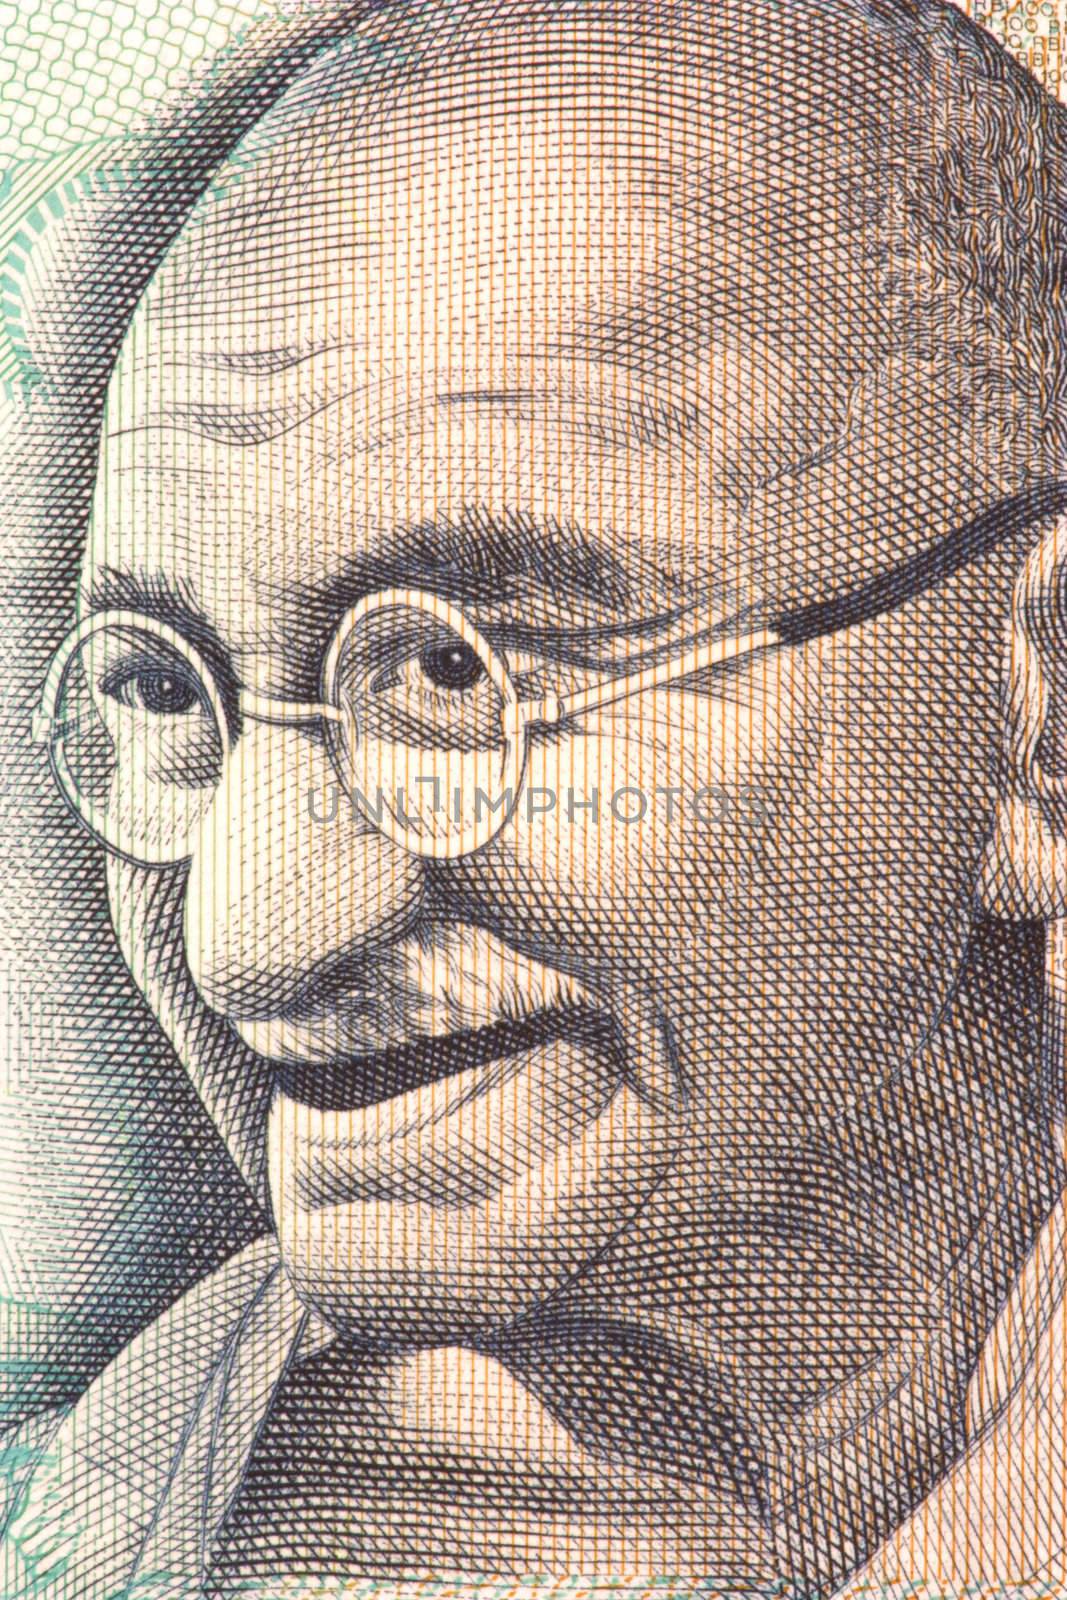 Macro image of Mahatma Gandhi on a currency note.